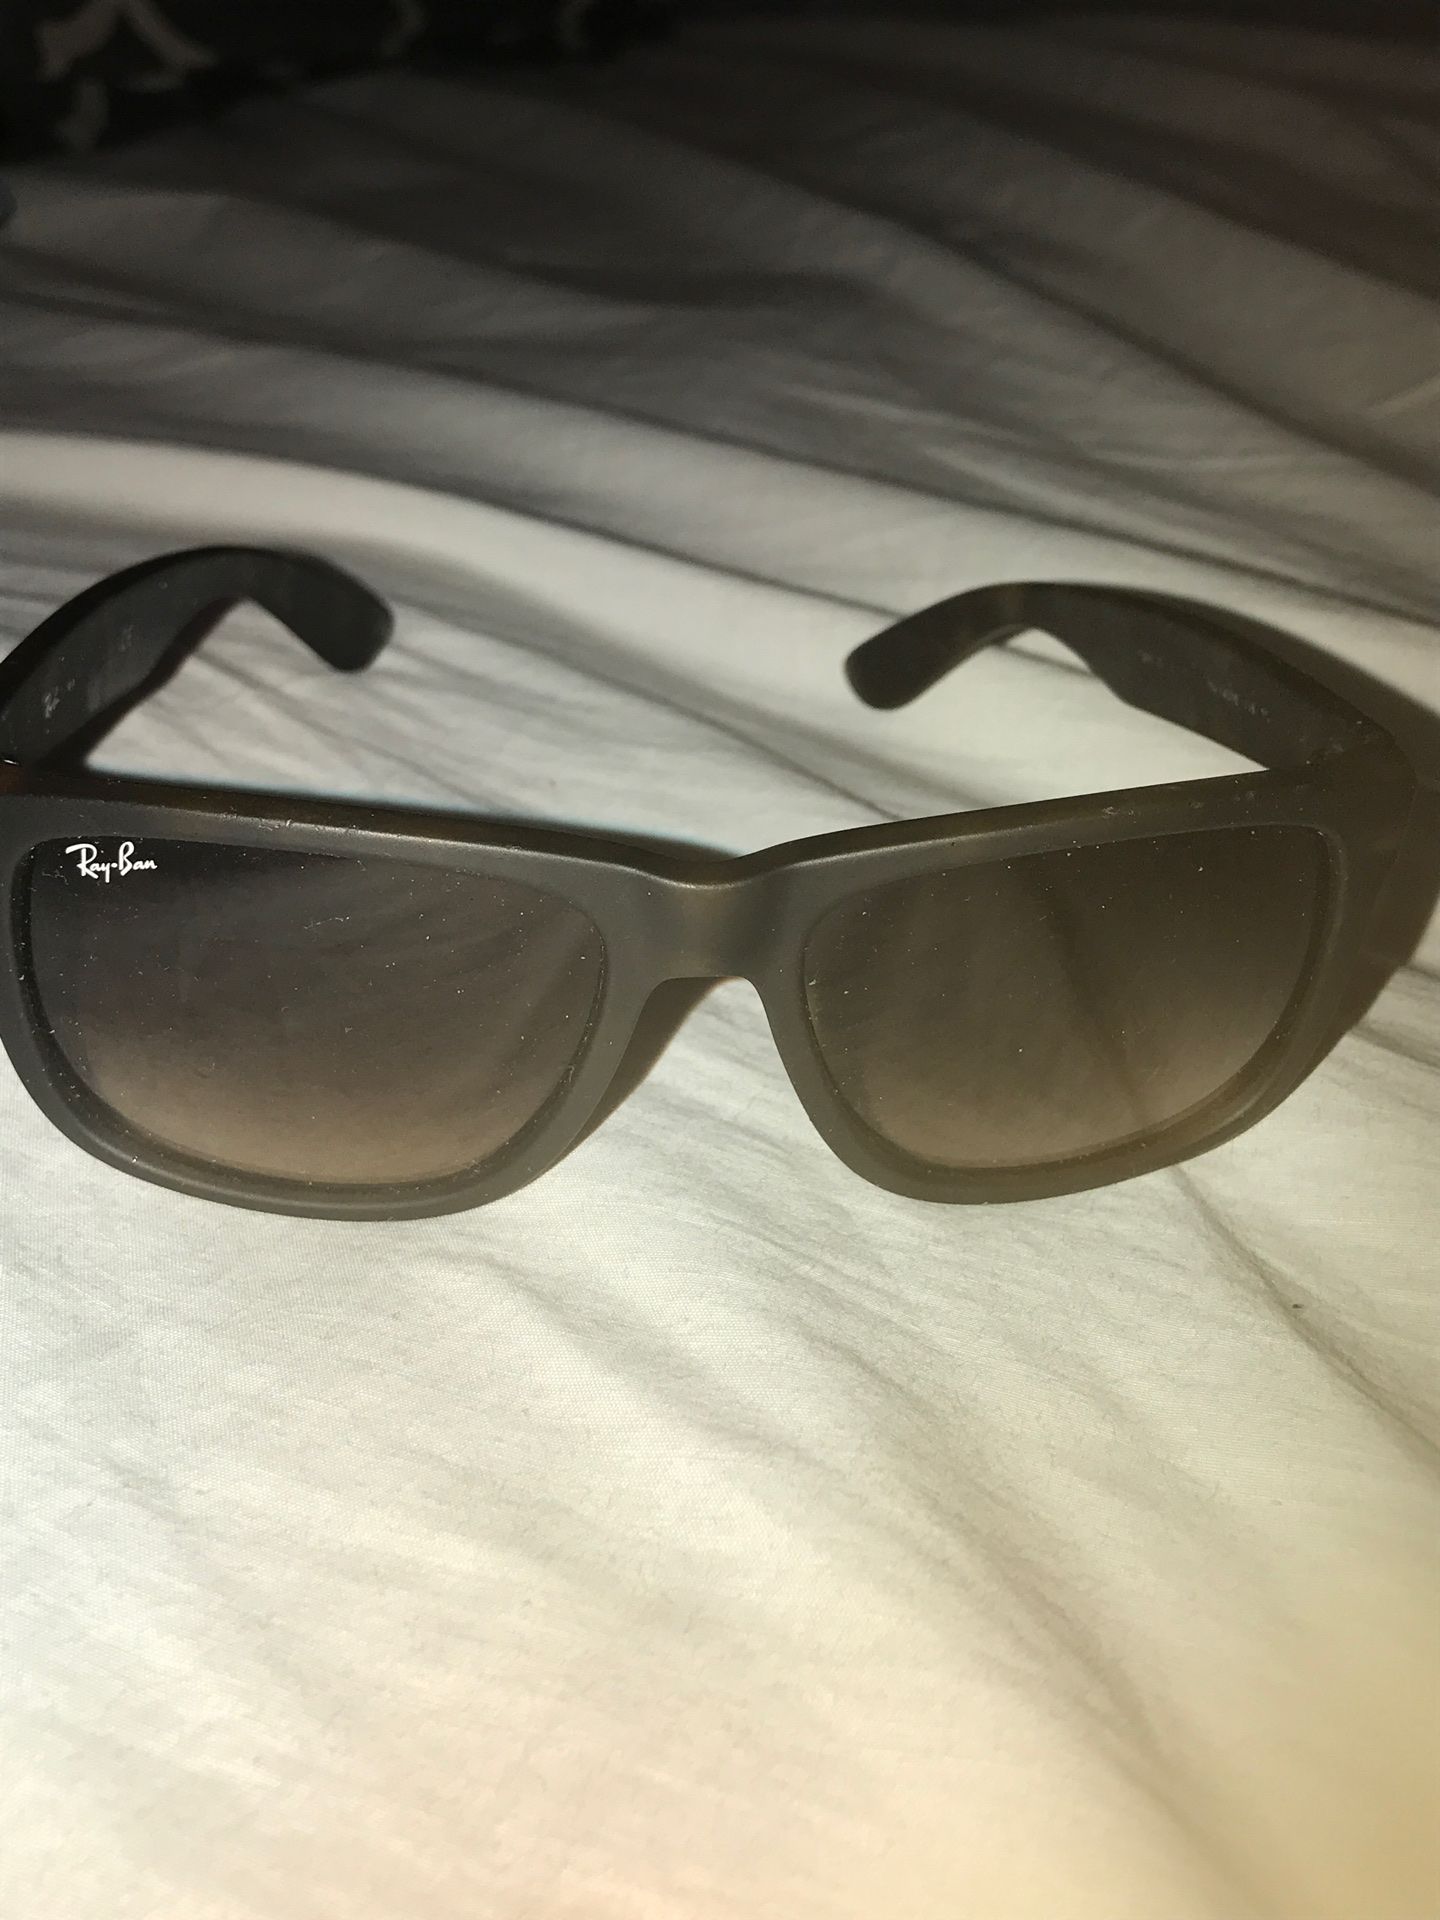 Brand new Ray ban sunglasses